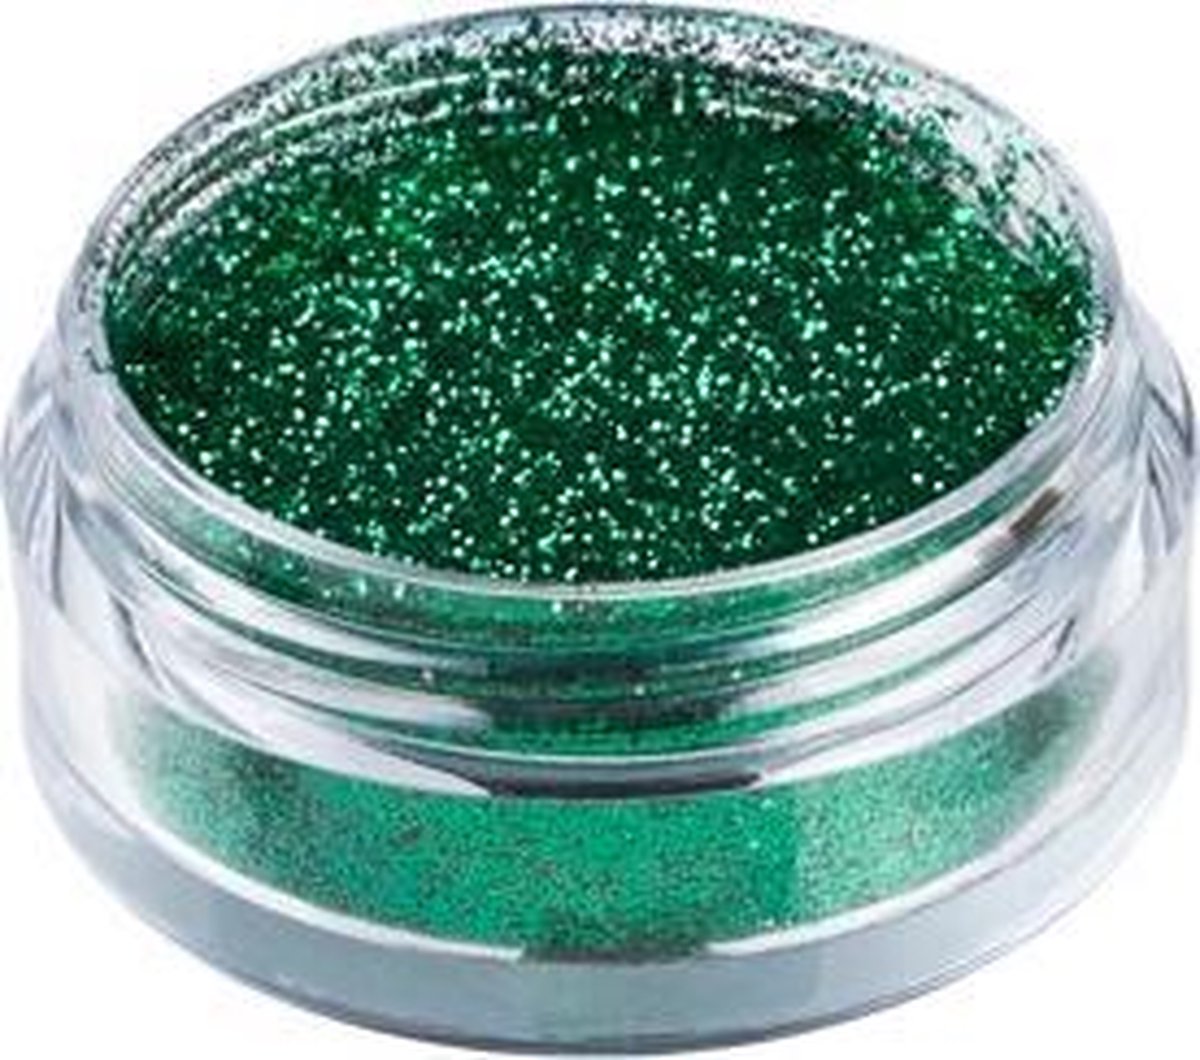 Ben Nye Sparklers Glitter - Emerald Green